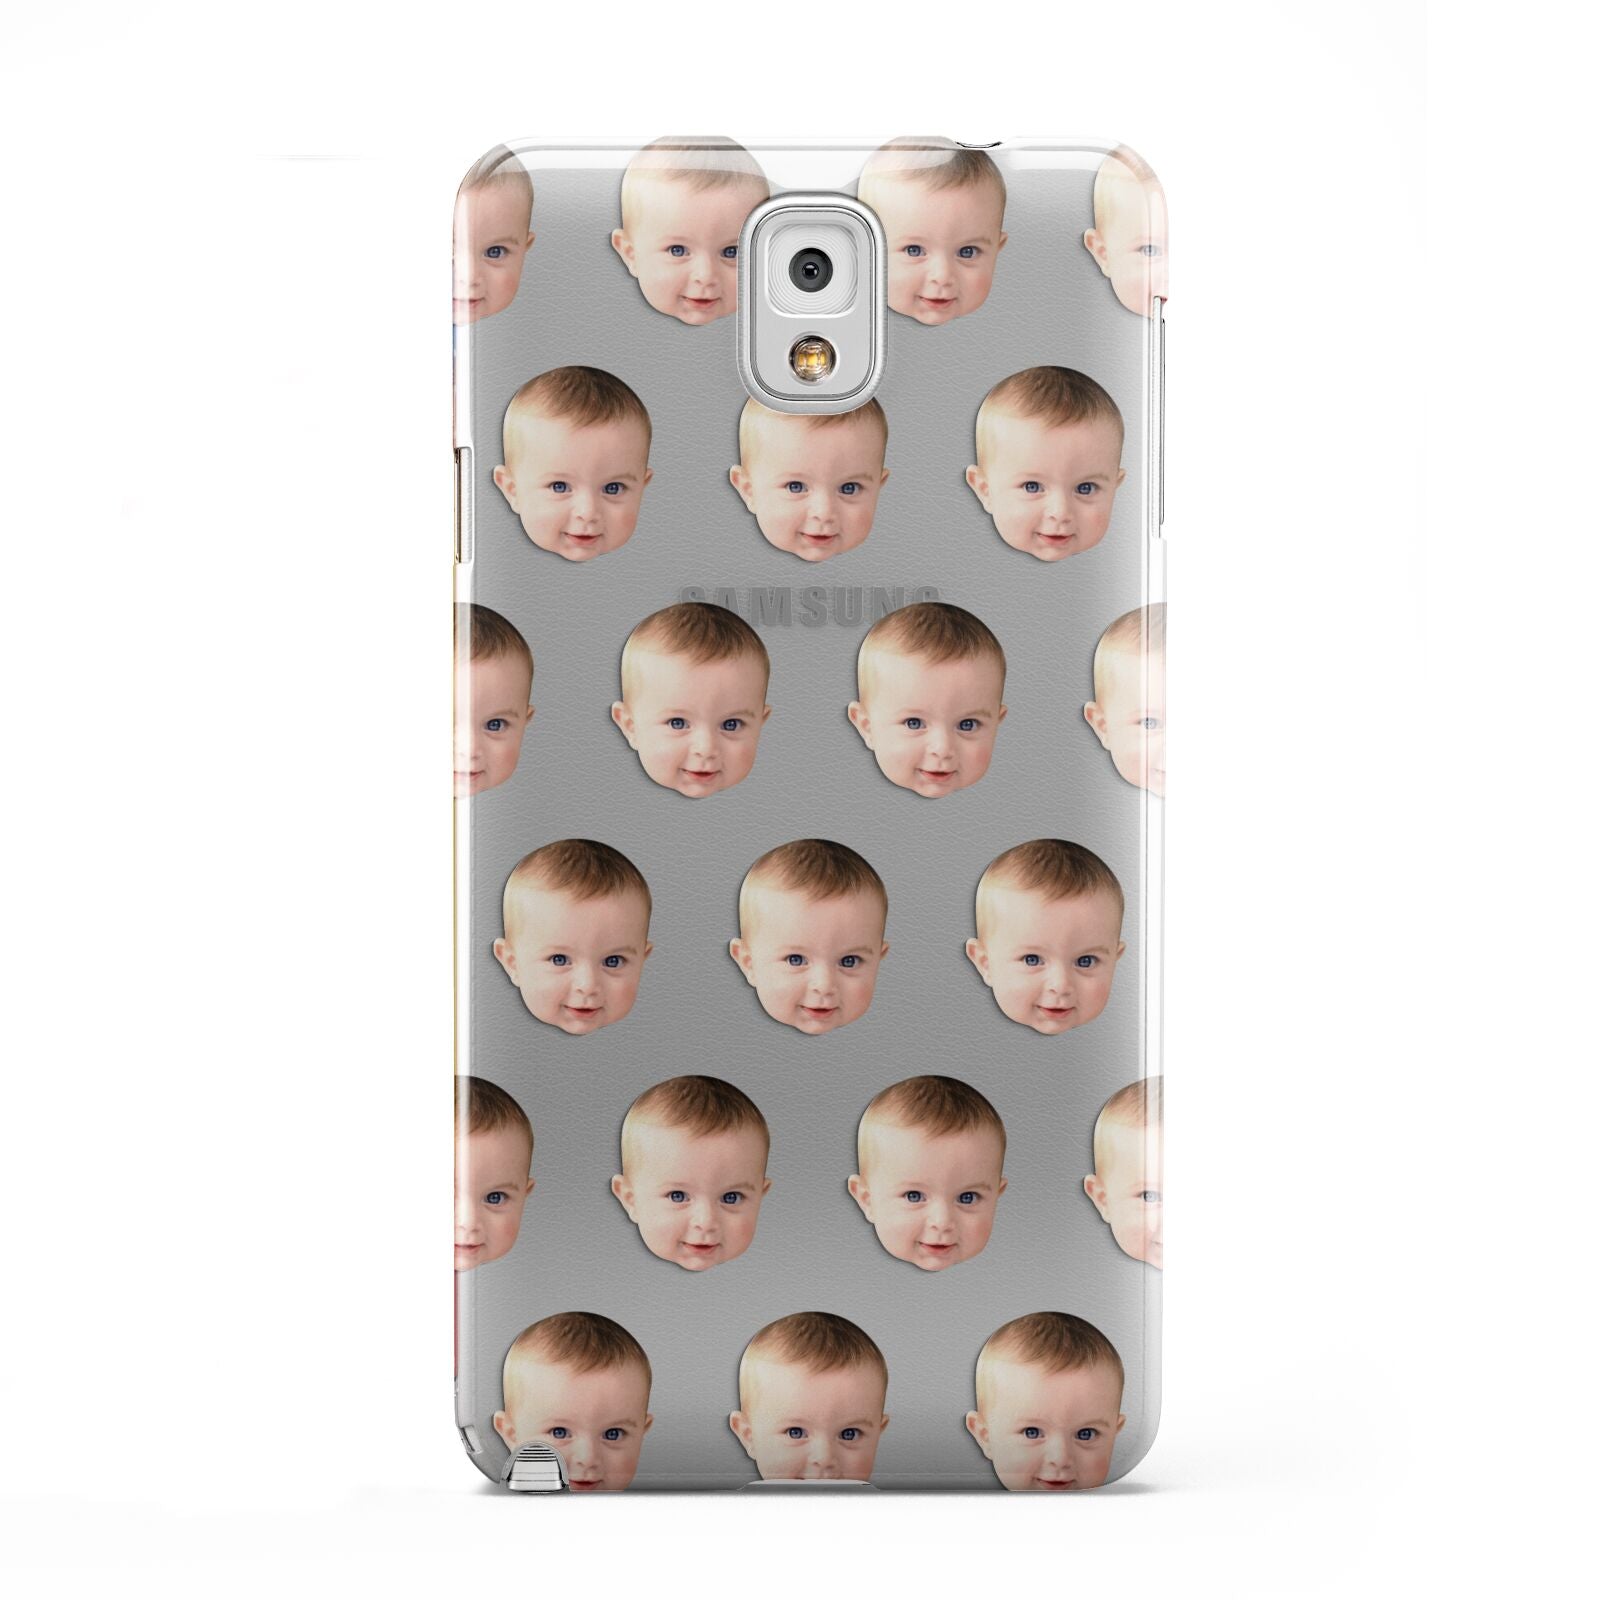 Baby Face Samsung Galaxy Note 3 Case